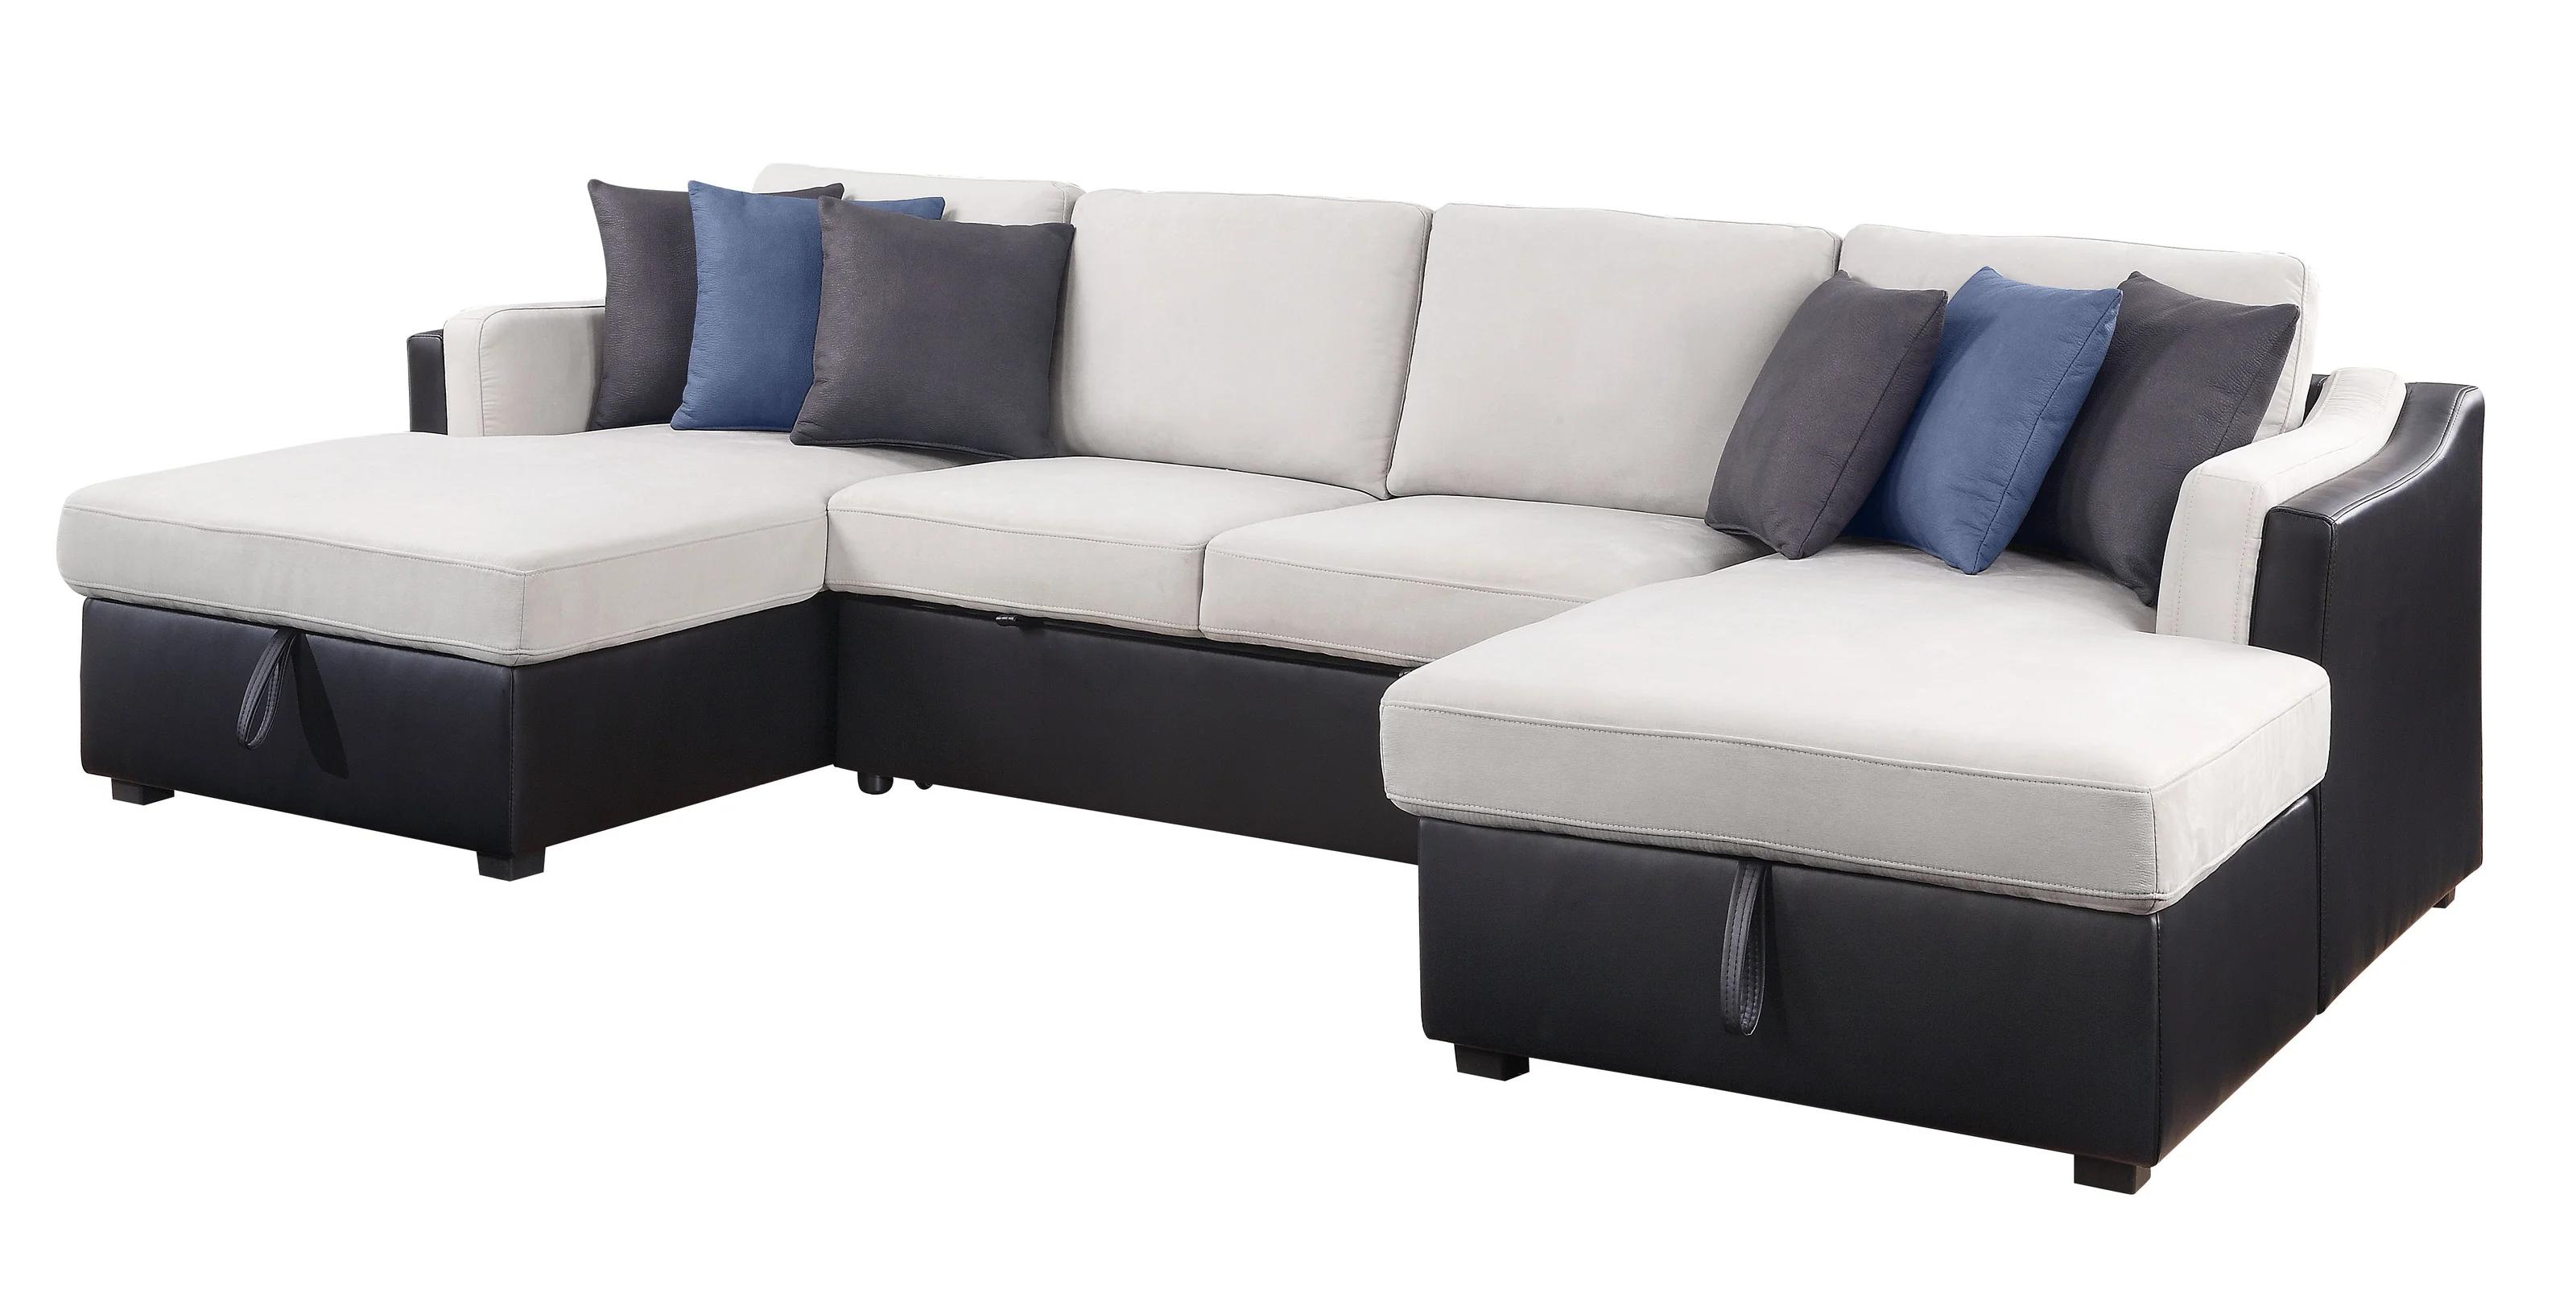 Modern, Transitional Sectional Sofa Merill 56015-3pcs in Black, Beige Fabric